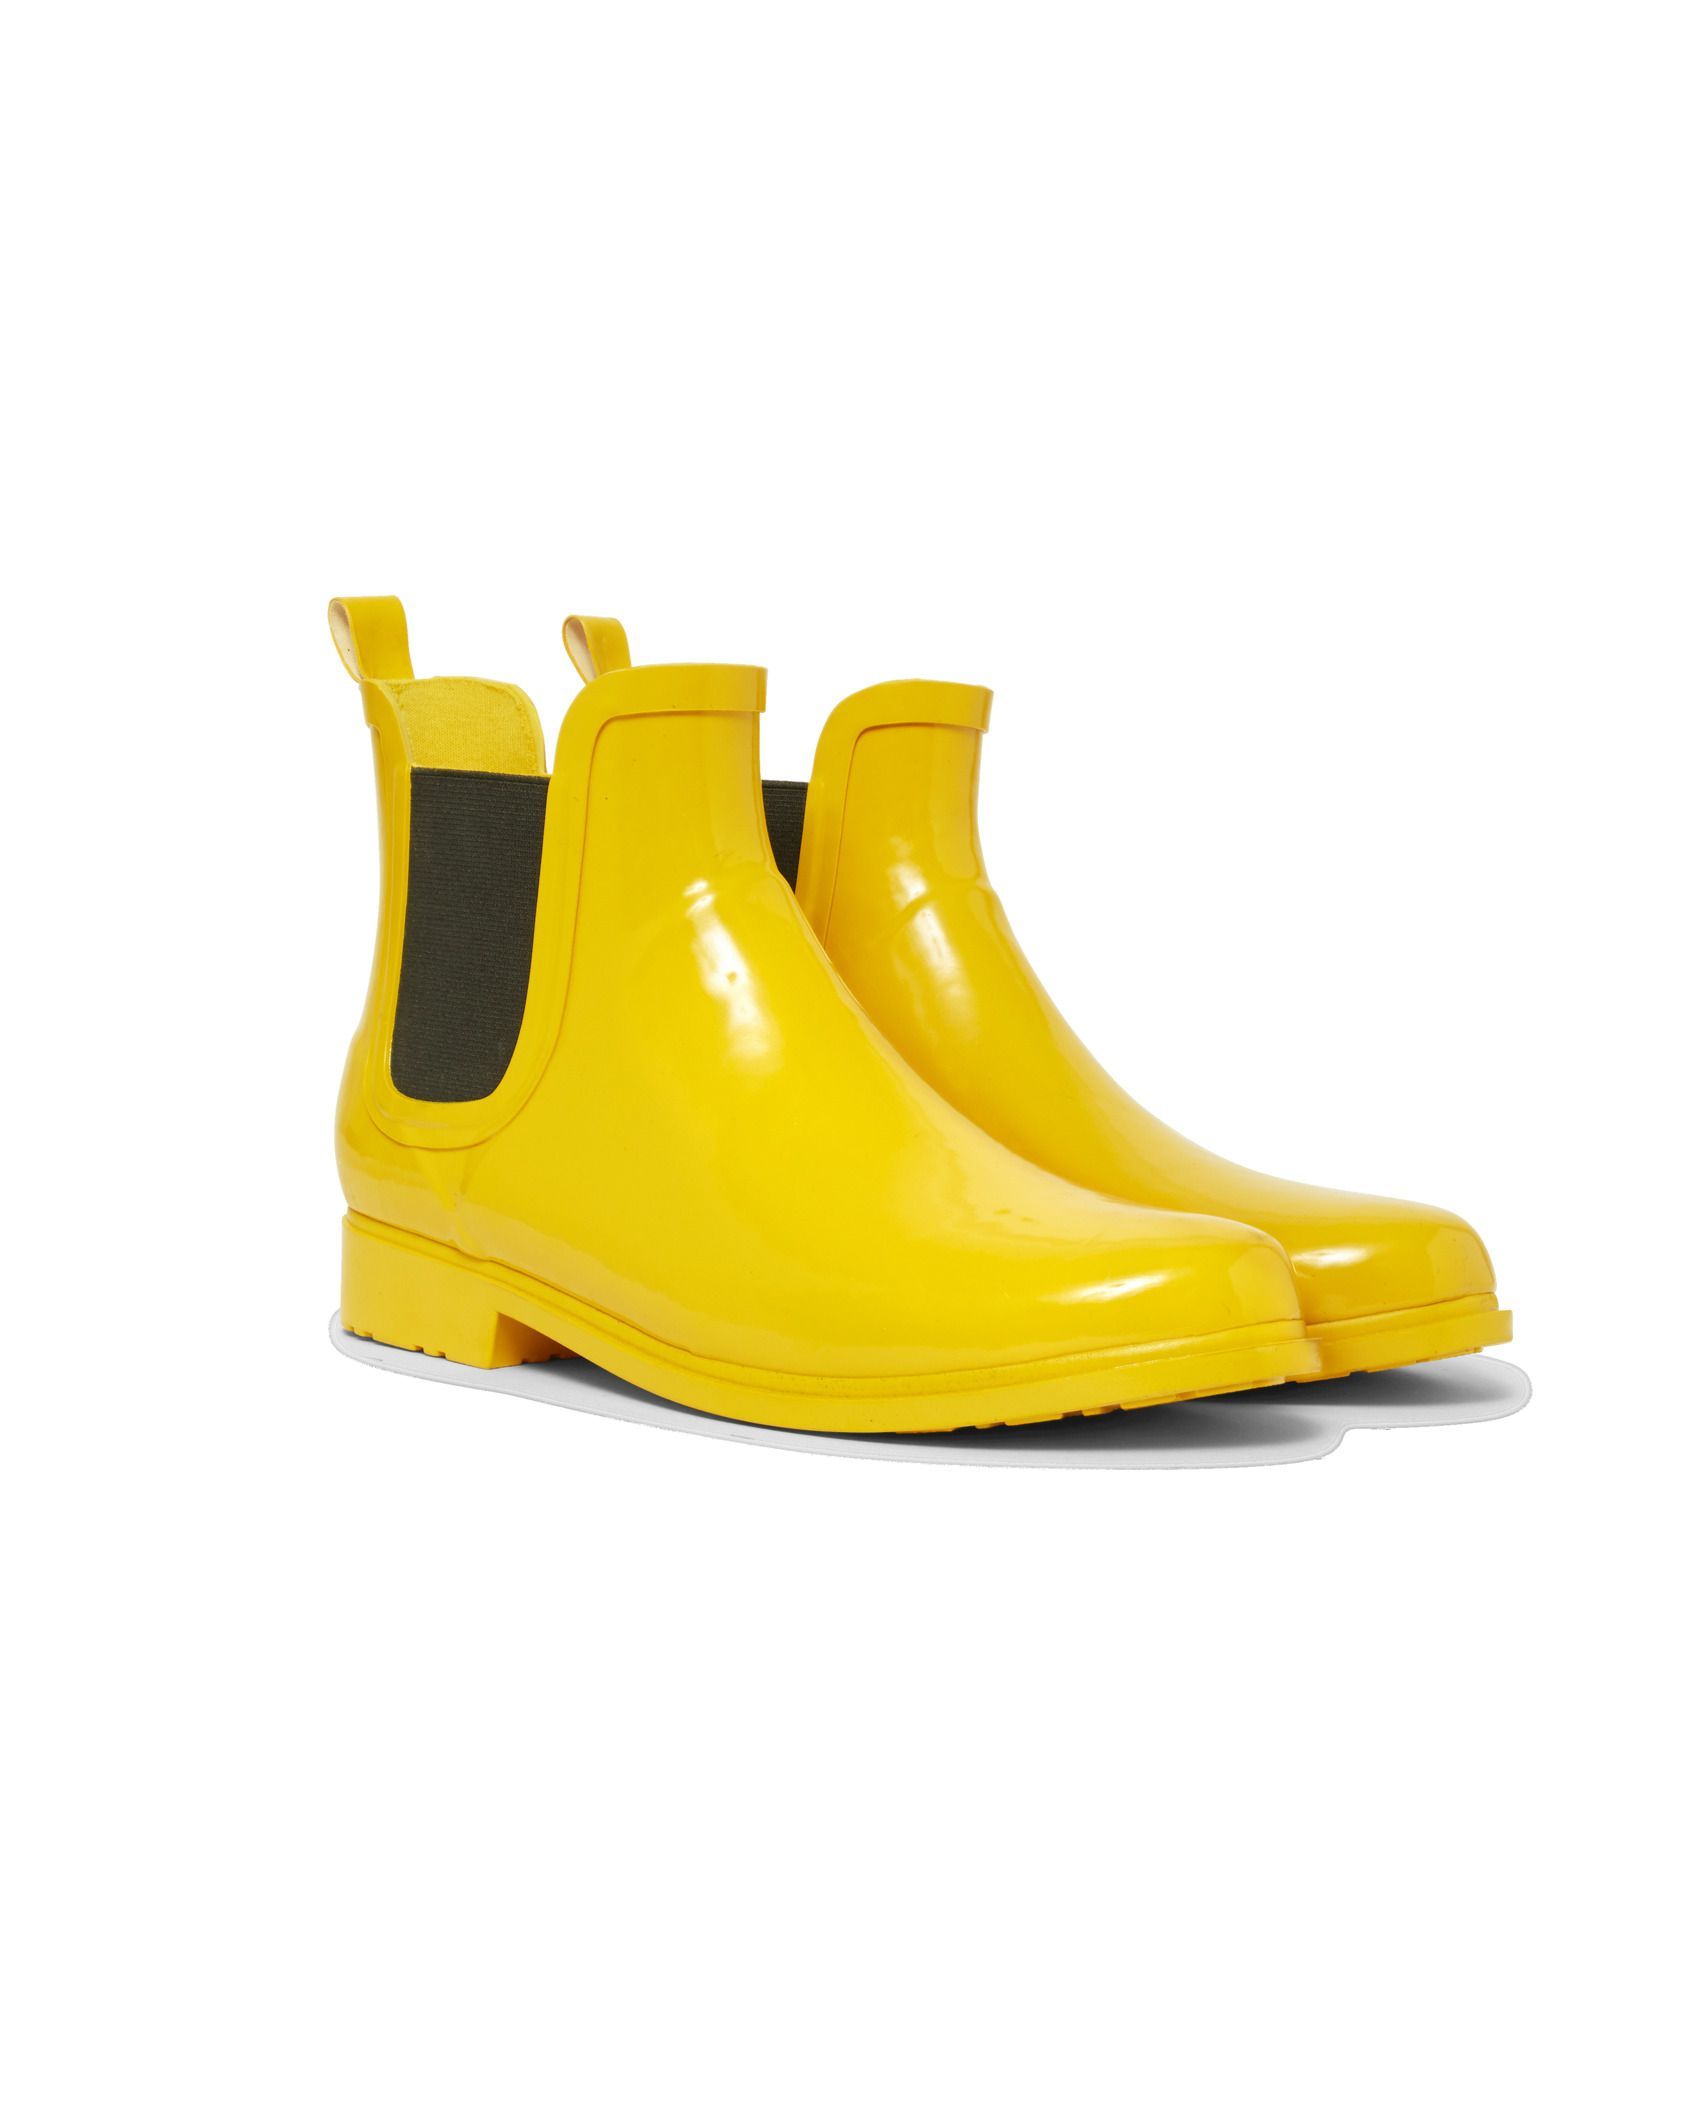 Women's Rain Boot Waterproof Mid-Calf Boots Cute Printing Rainbow Rain Boots Wellies Rain Shoes UK Brand